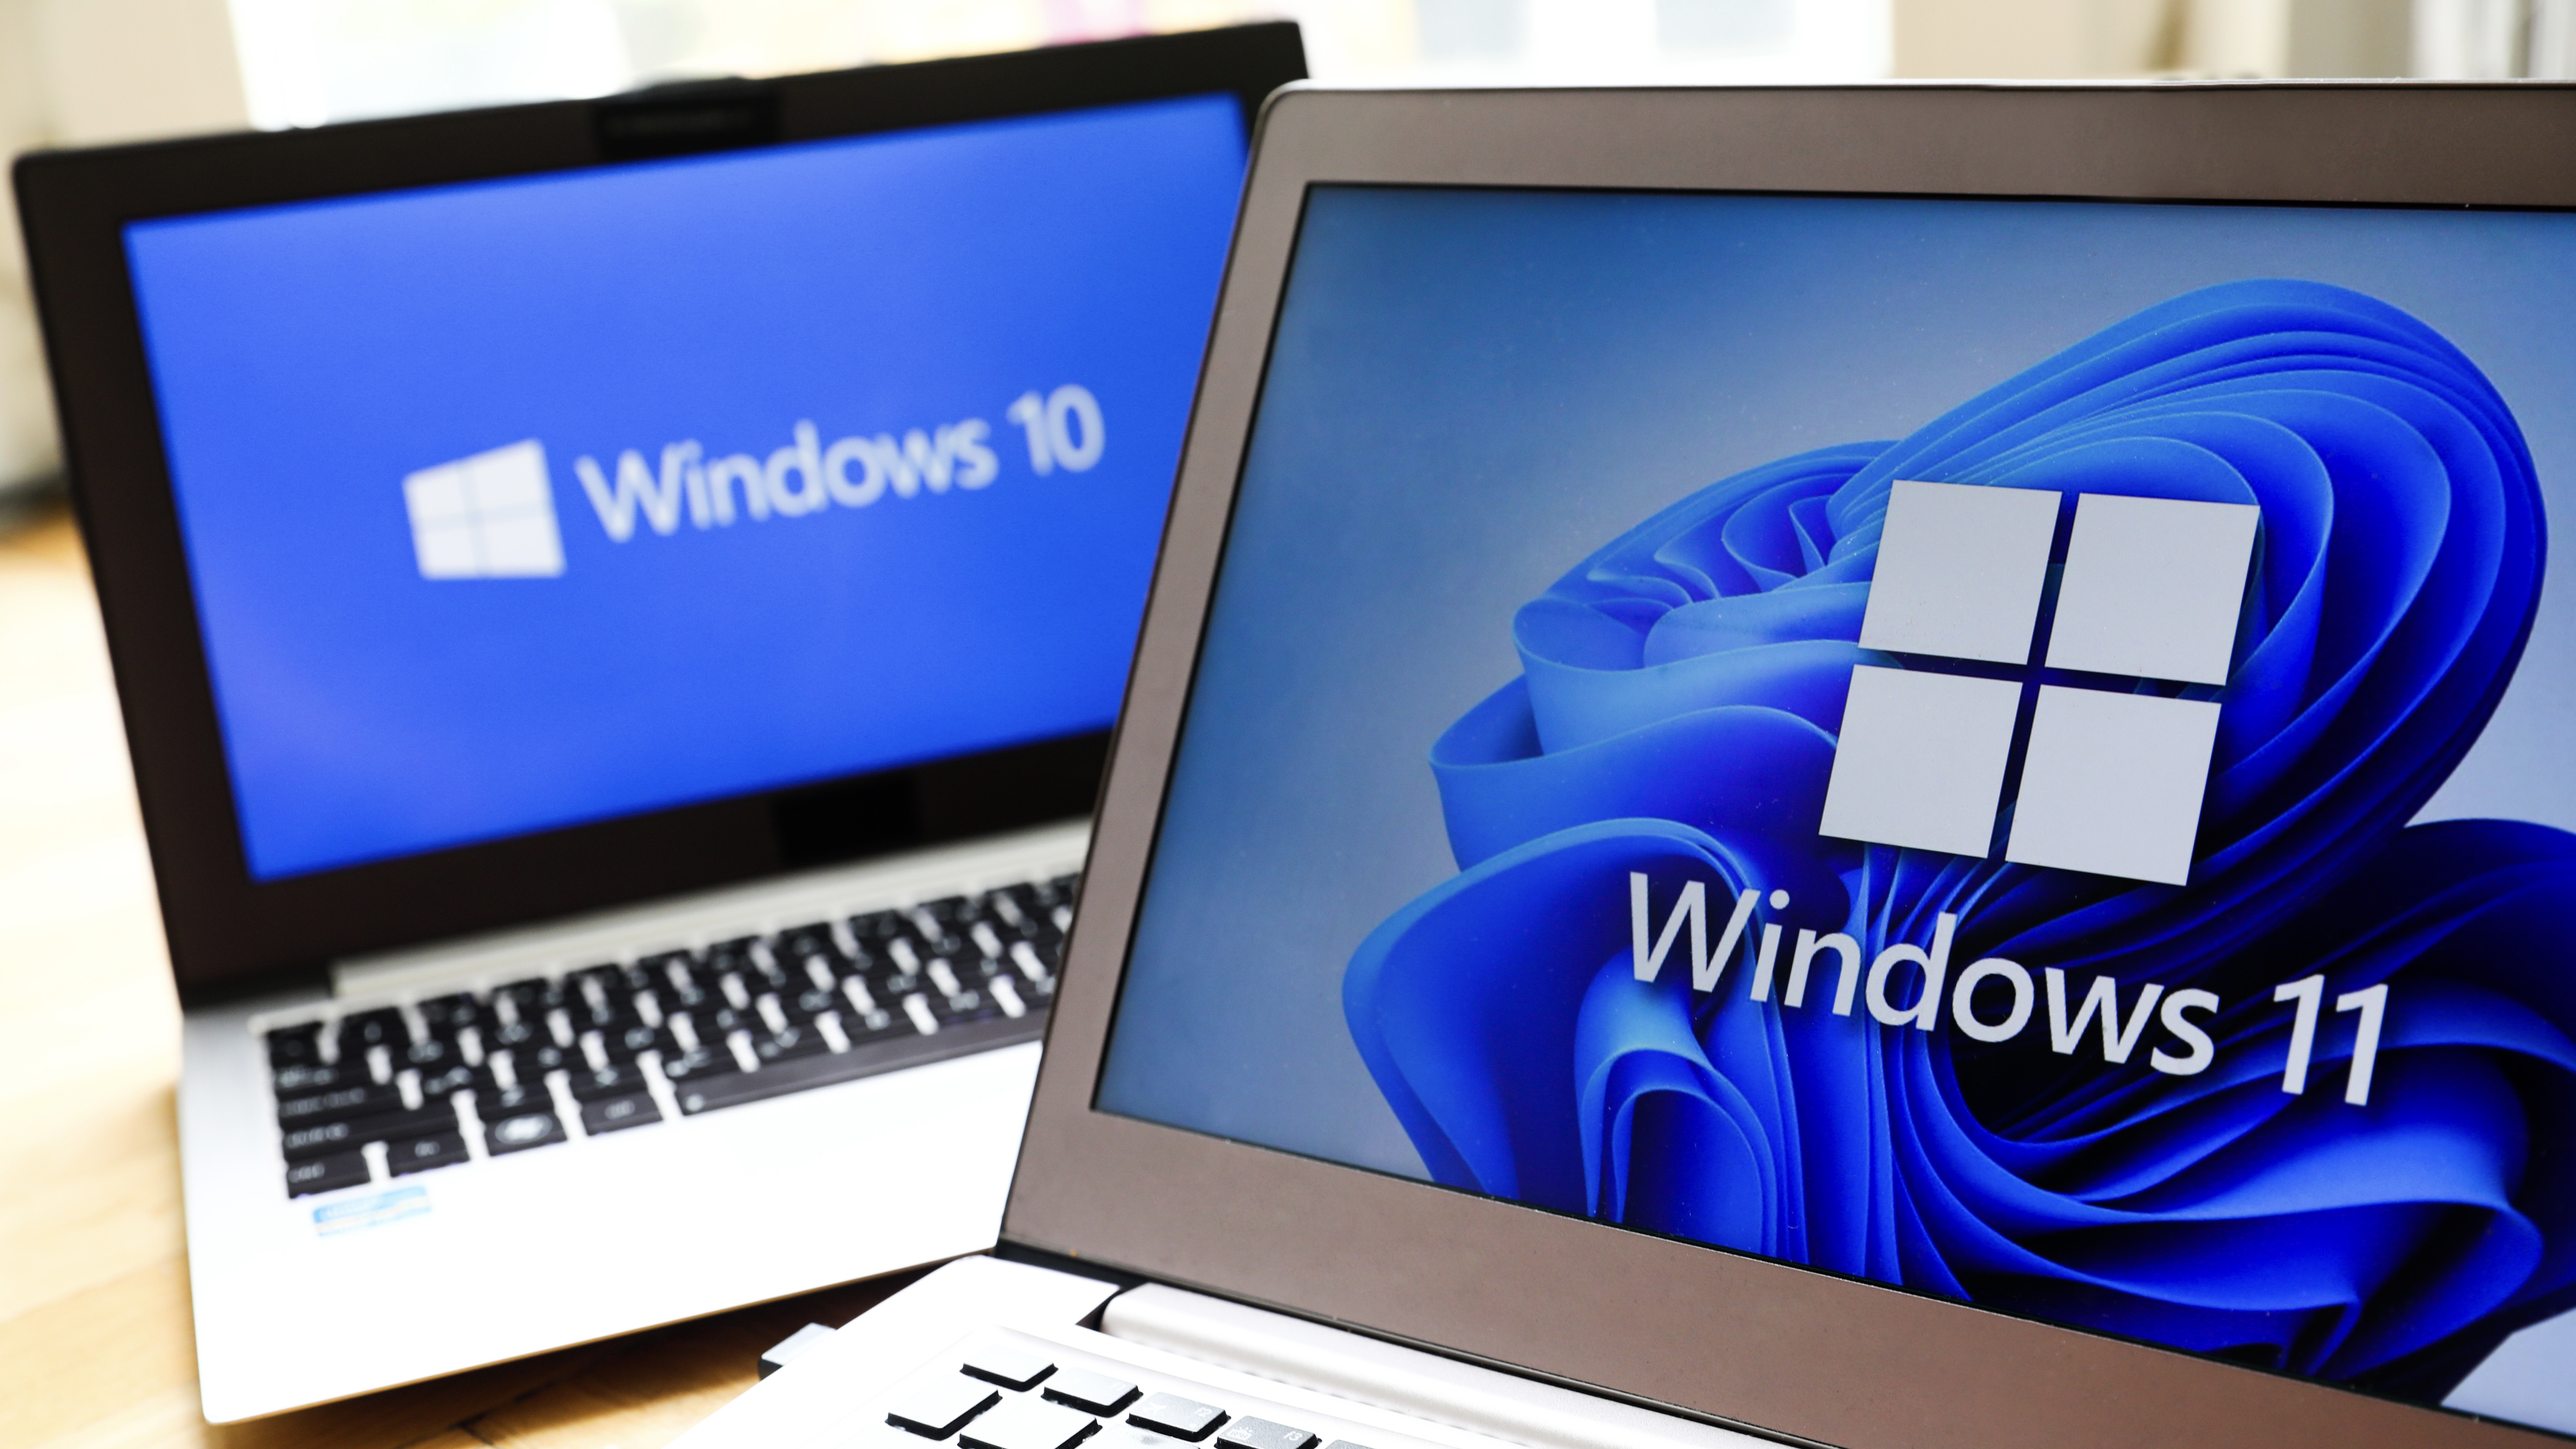 Windows 11 23H2 Full Review